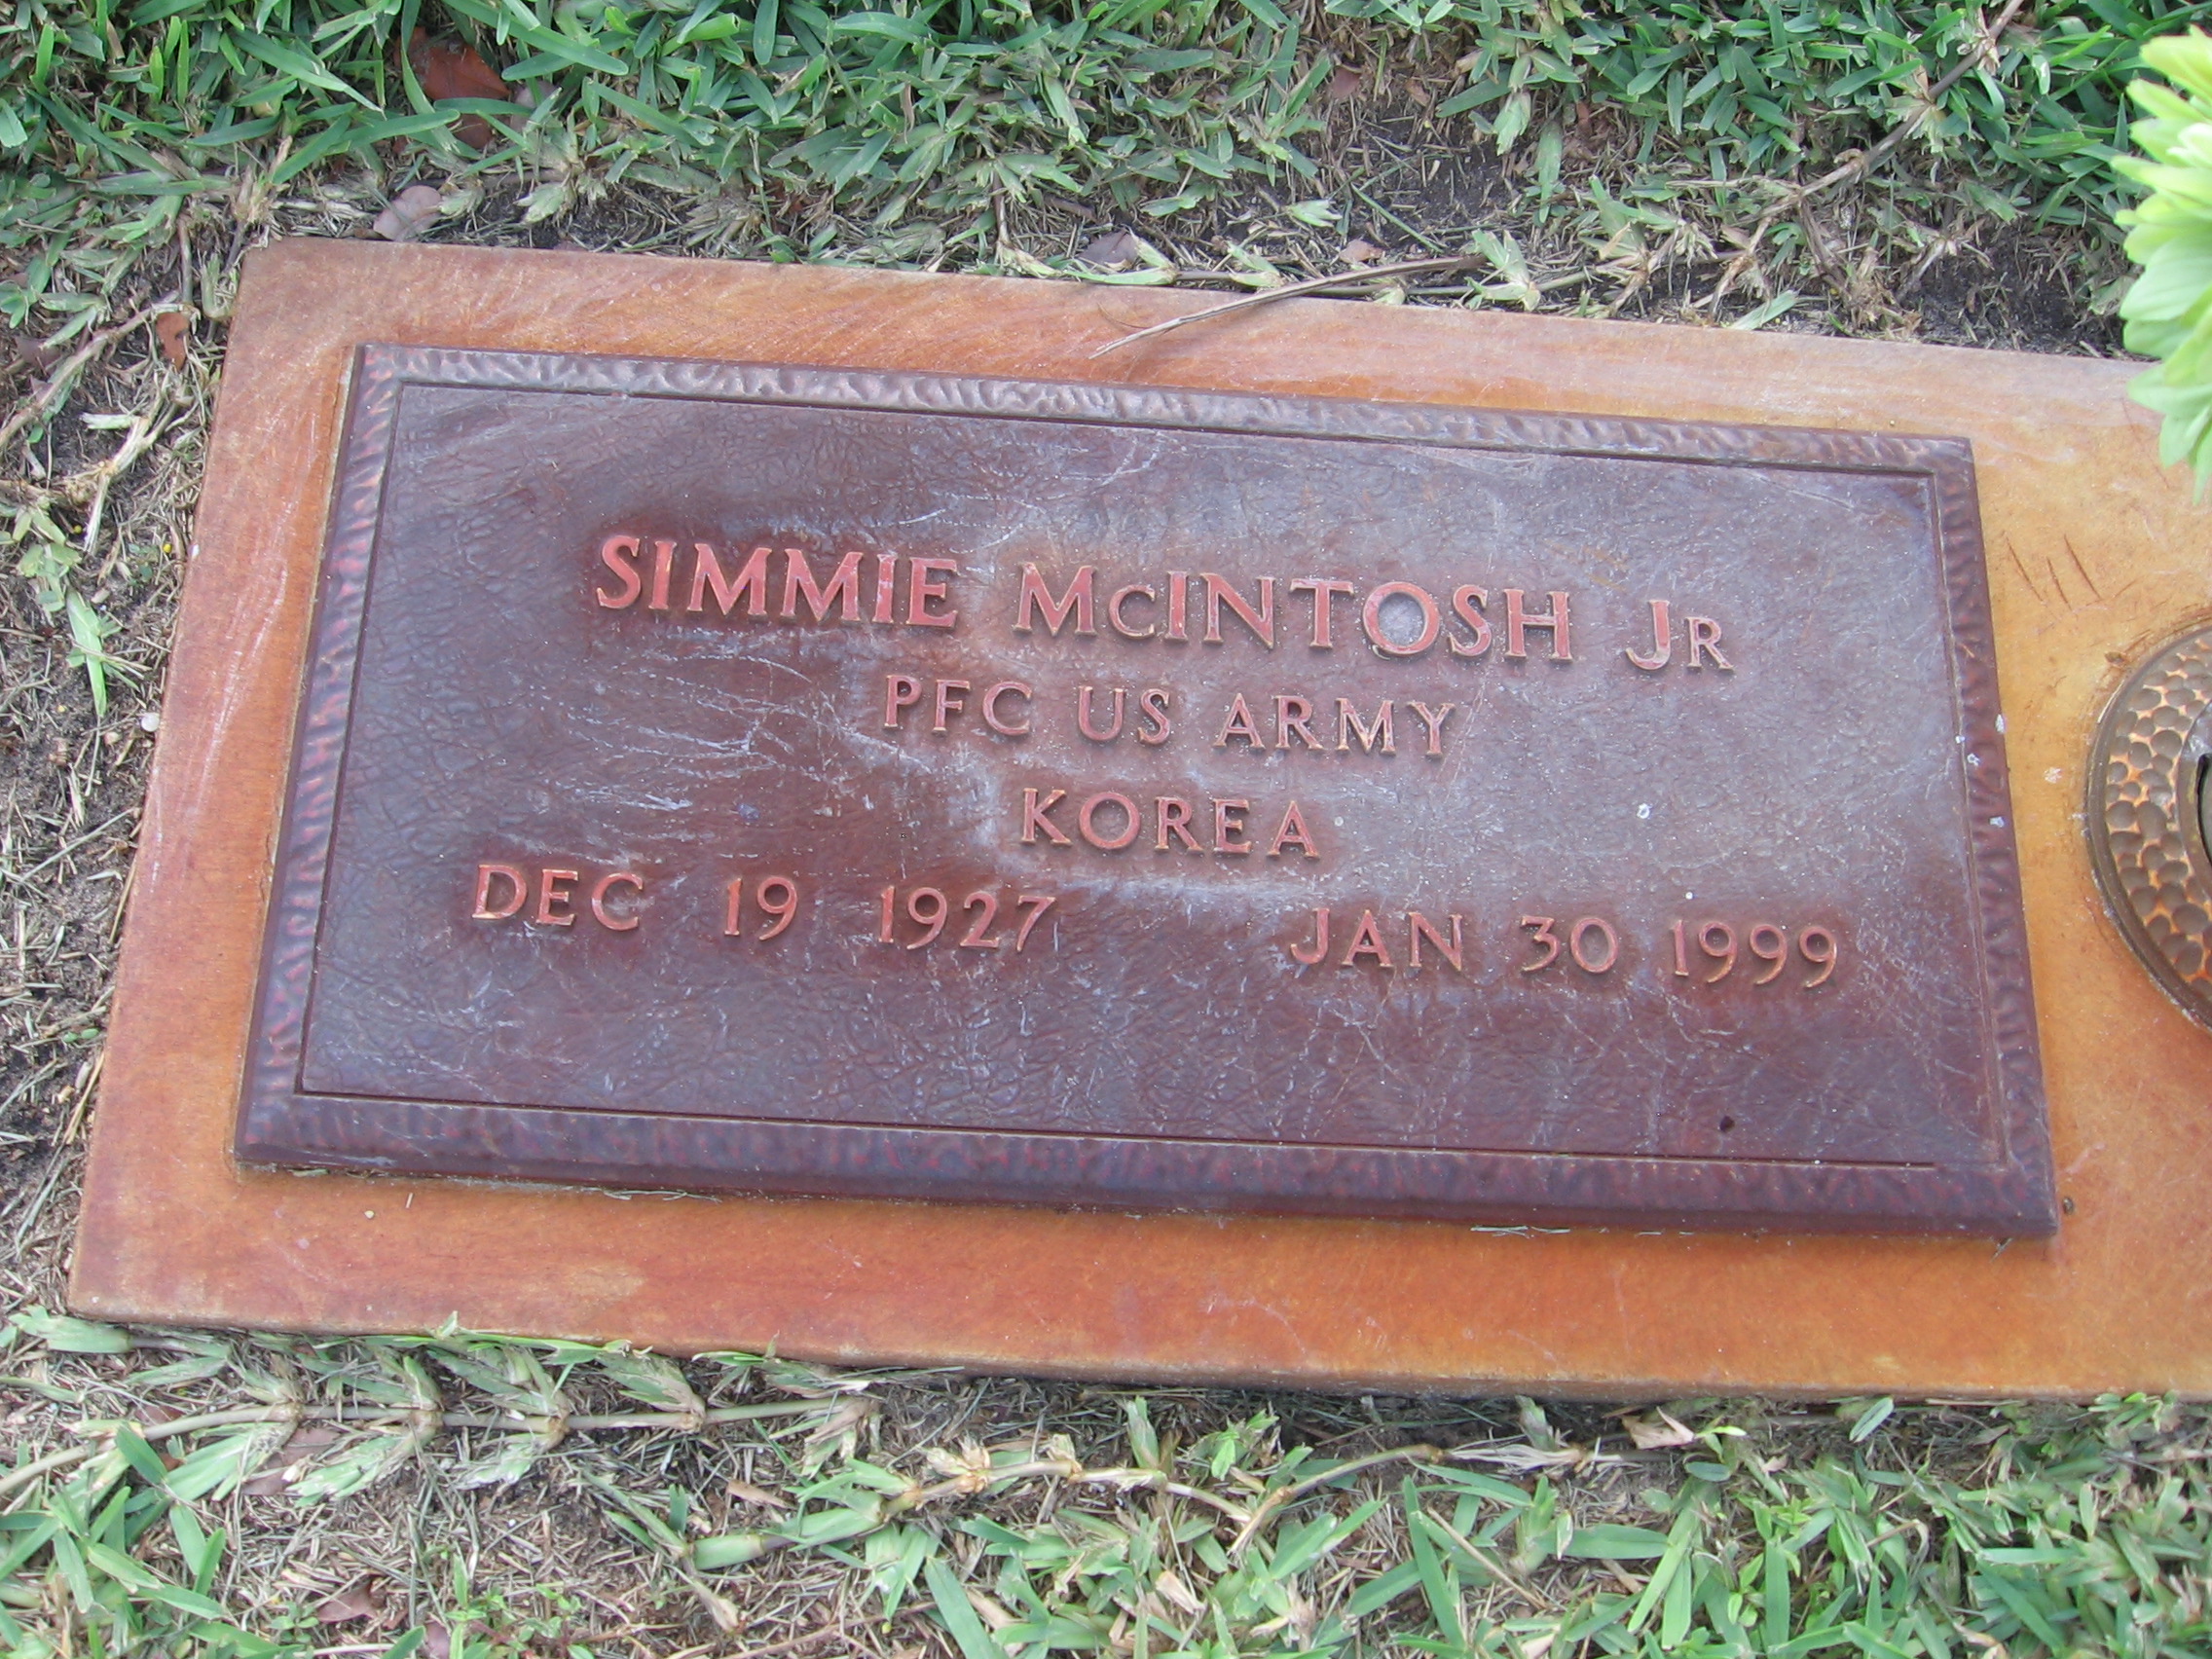 Simmie McIntosh, Jr